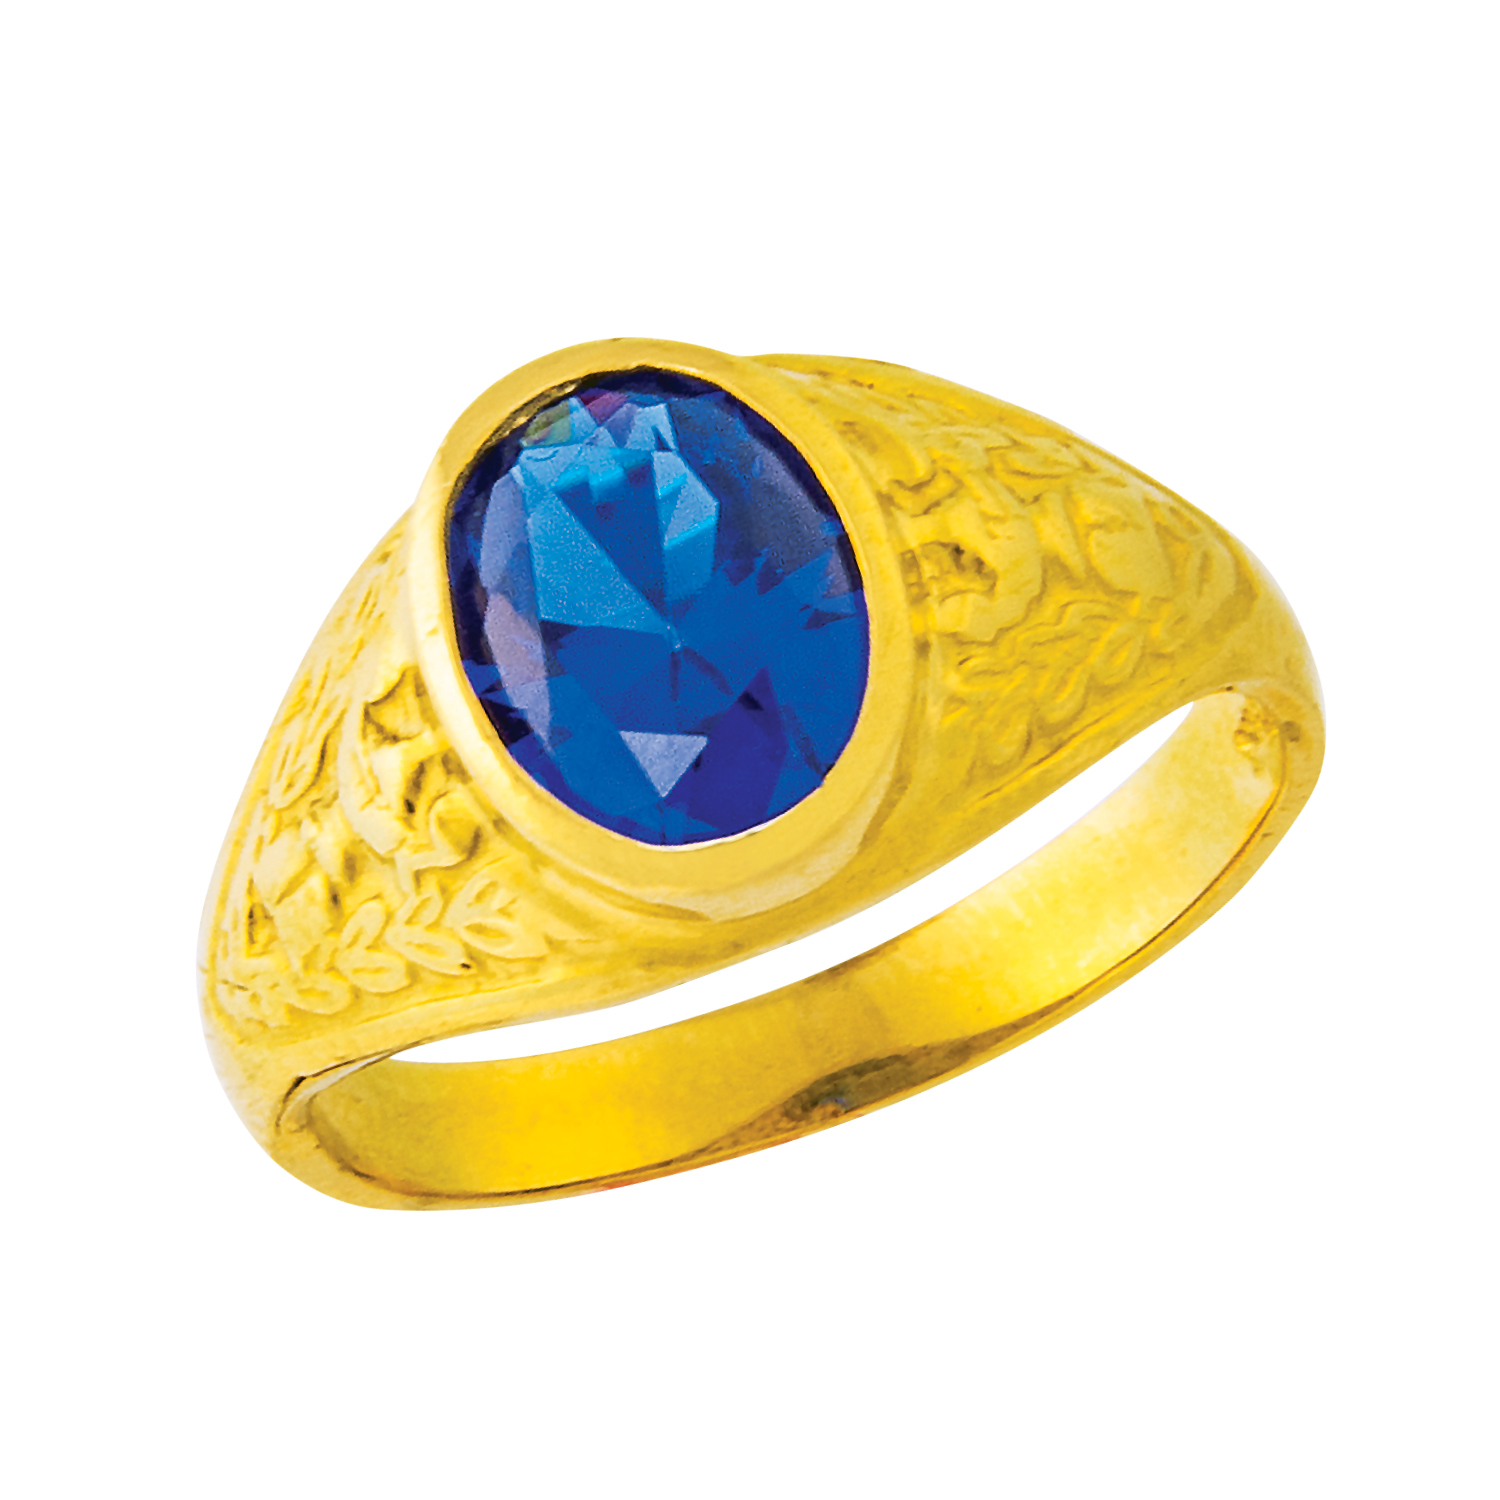 22k Kids Stone Ring(Baby Girl) - BjRi10619 - 22k gold baby gold ring in  filigree design with single stone (CZ) studded at the center design. App